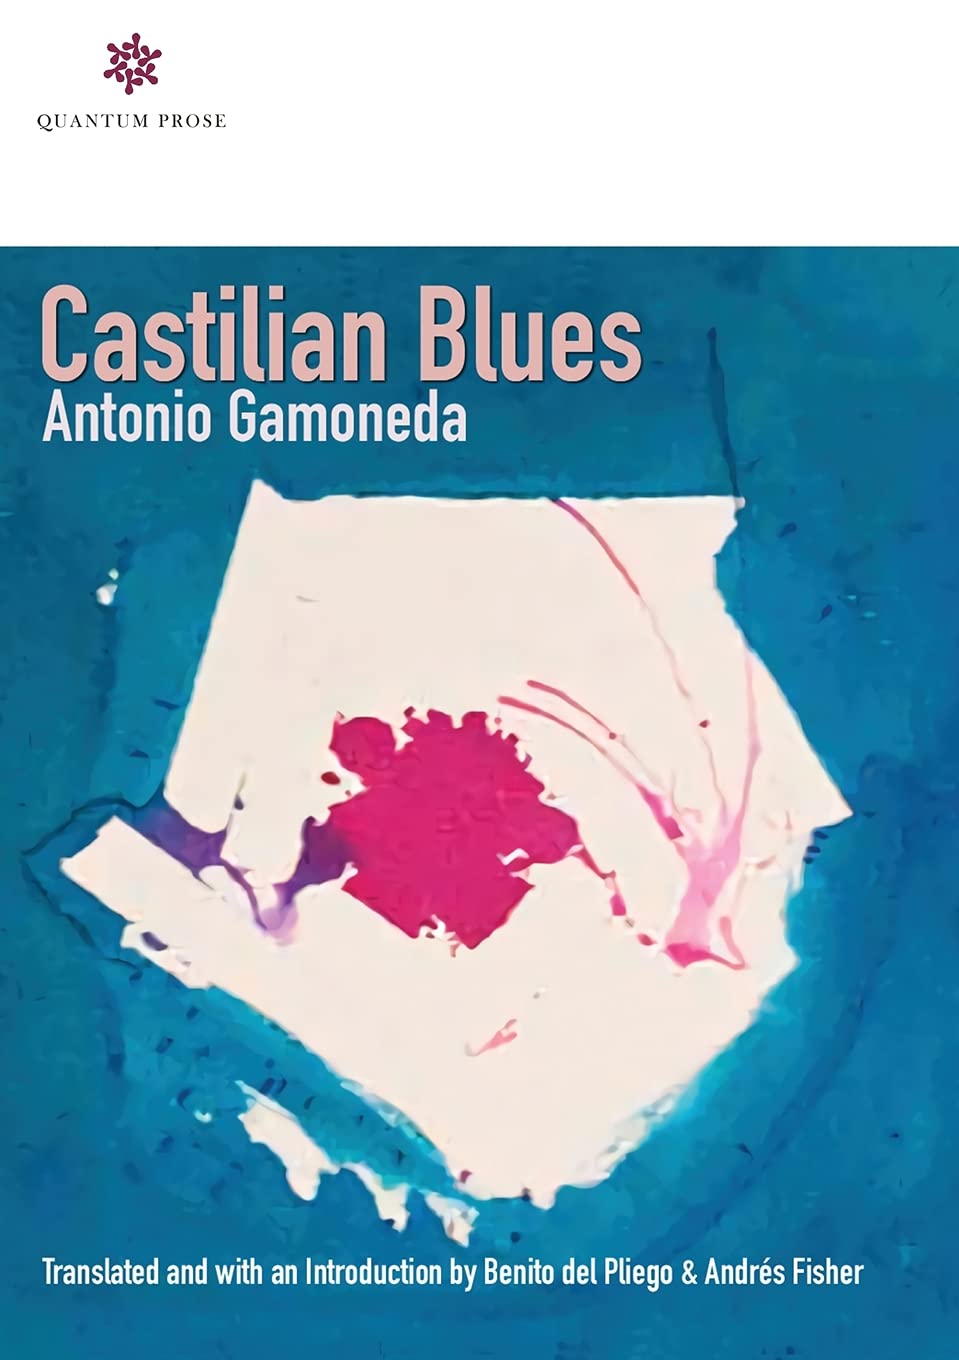 Castilian Blues by Antonio Gamoneda